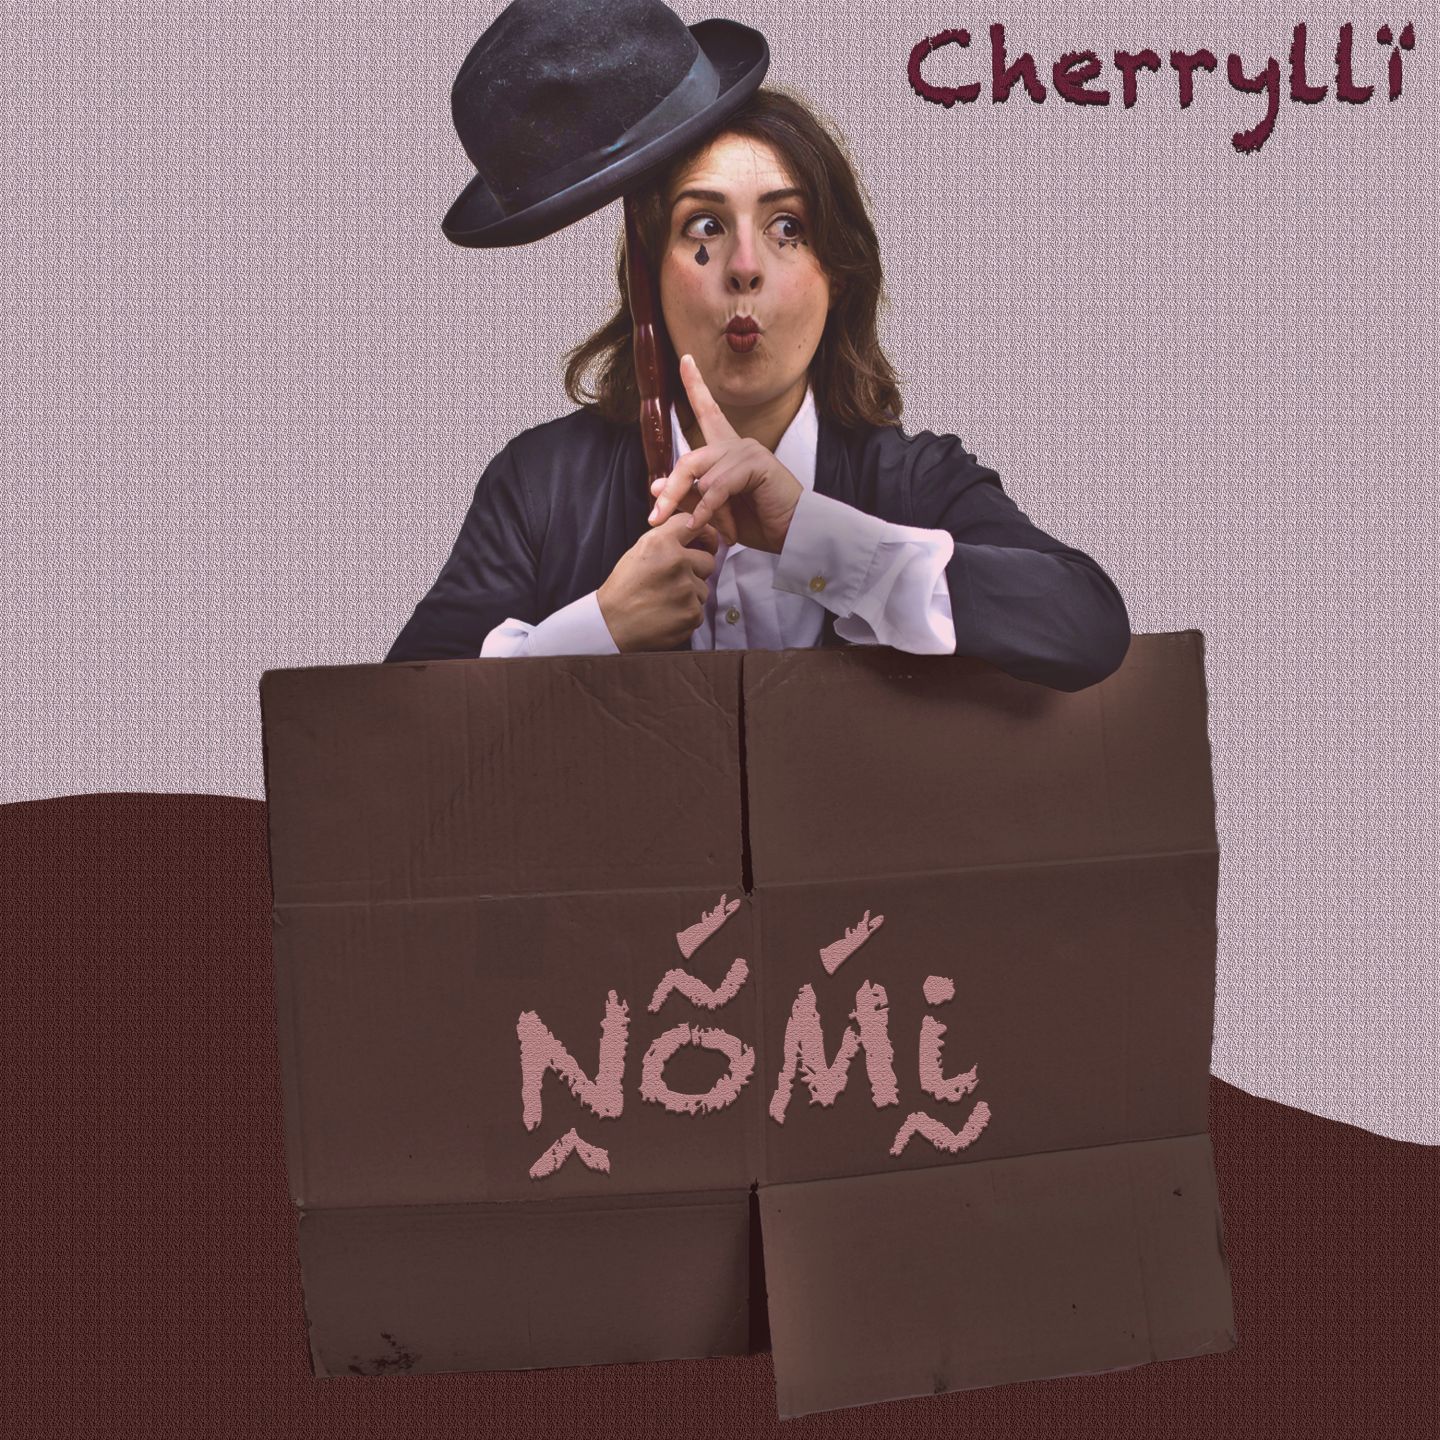 Cherrylli – “Nomi”